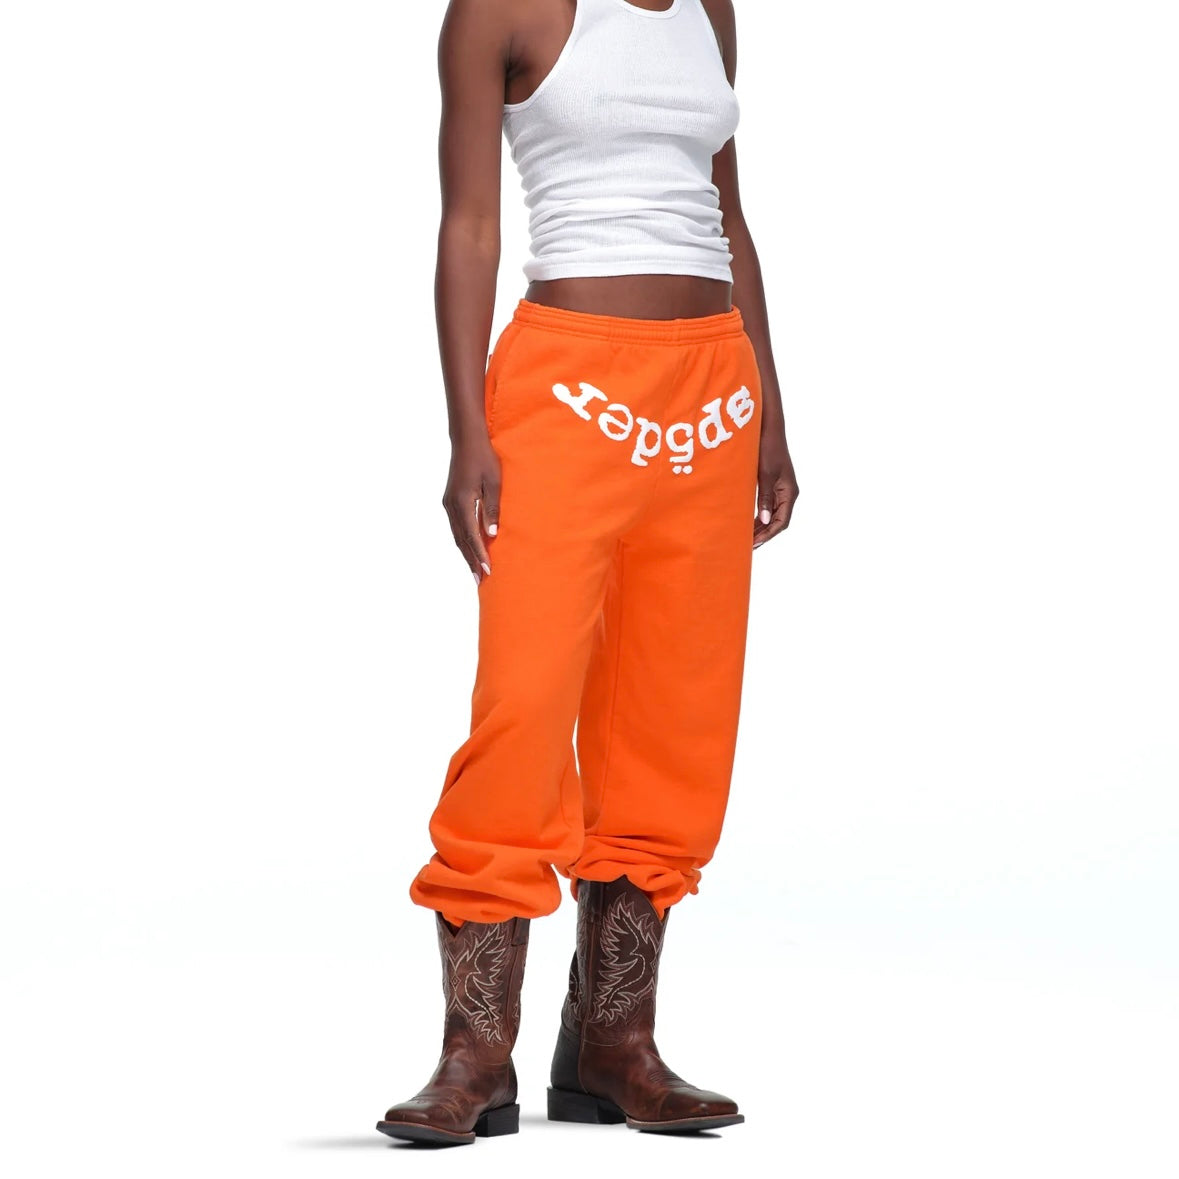 Sp5der Orange White Legacy Sweatpants On Body Front RIght